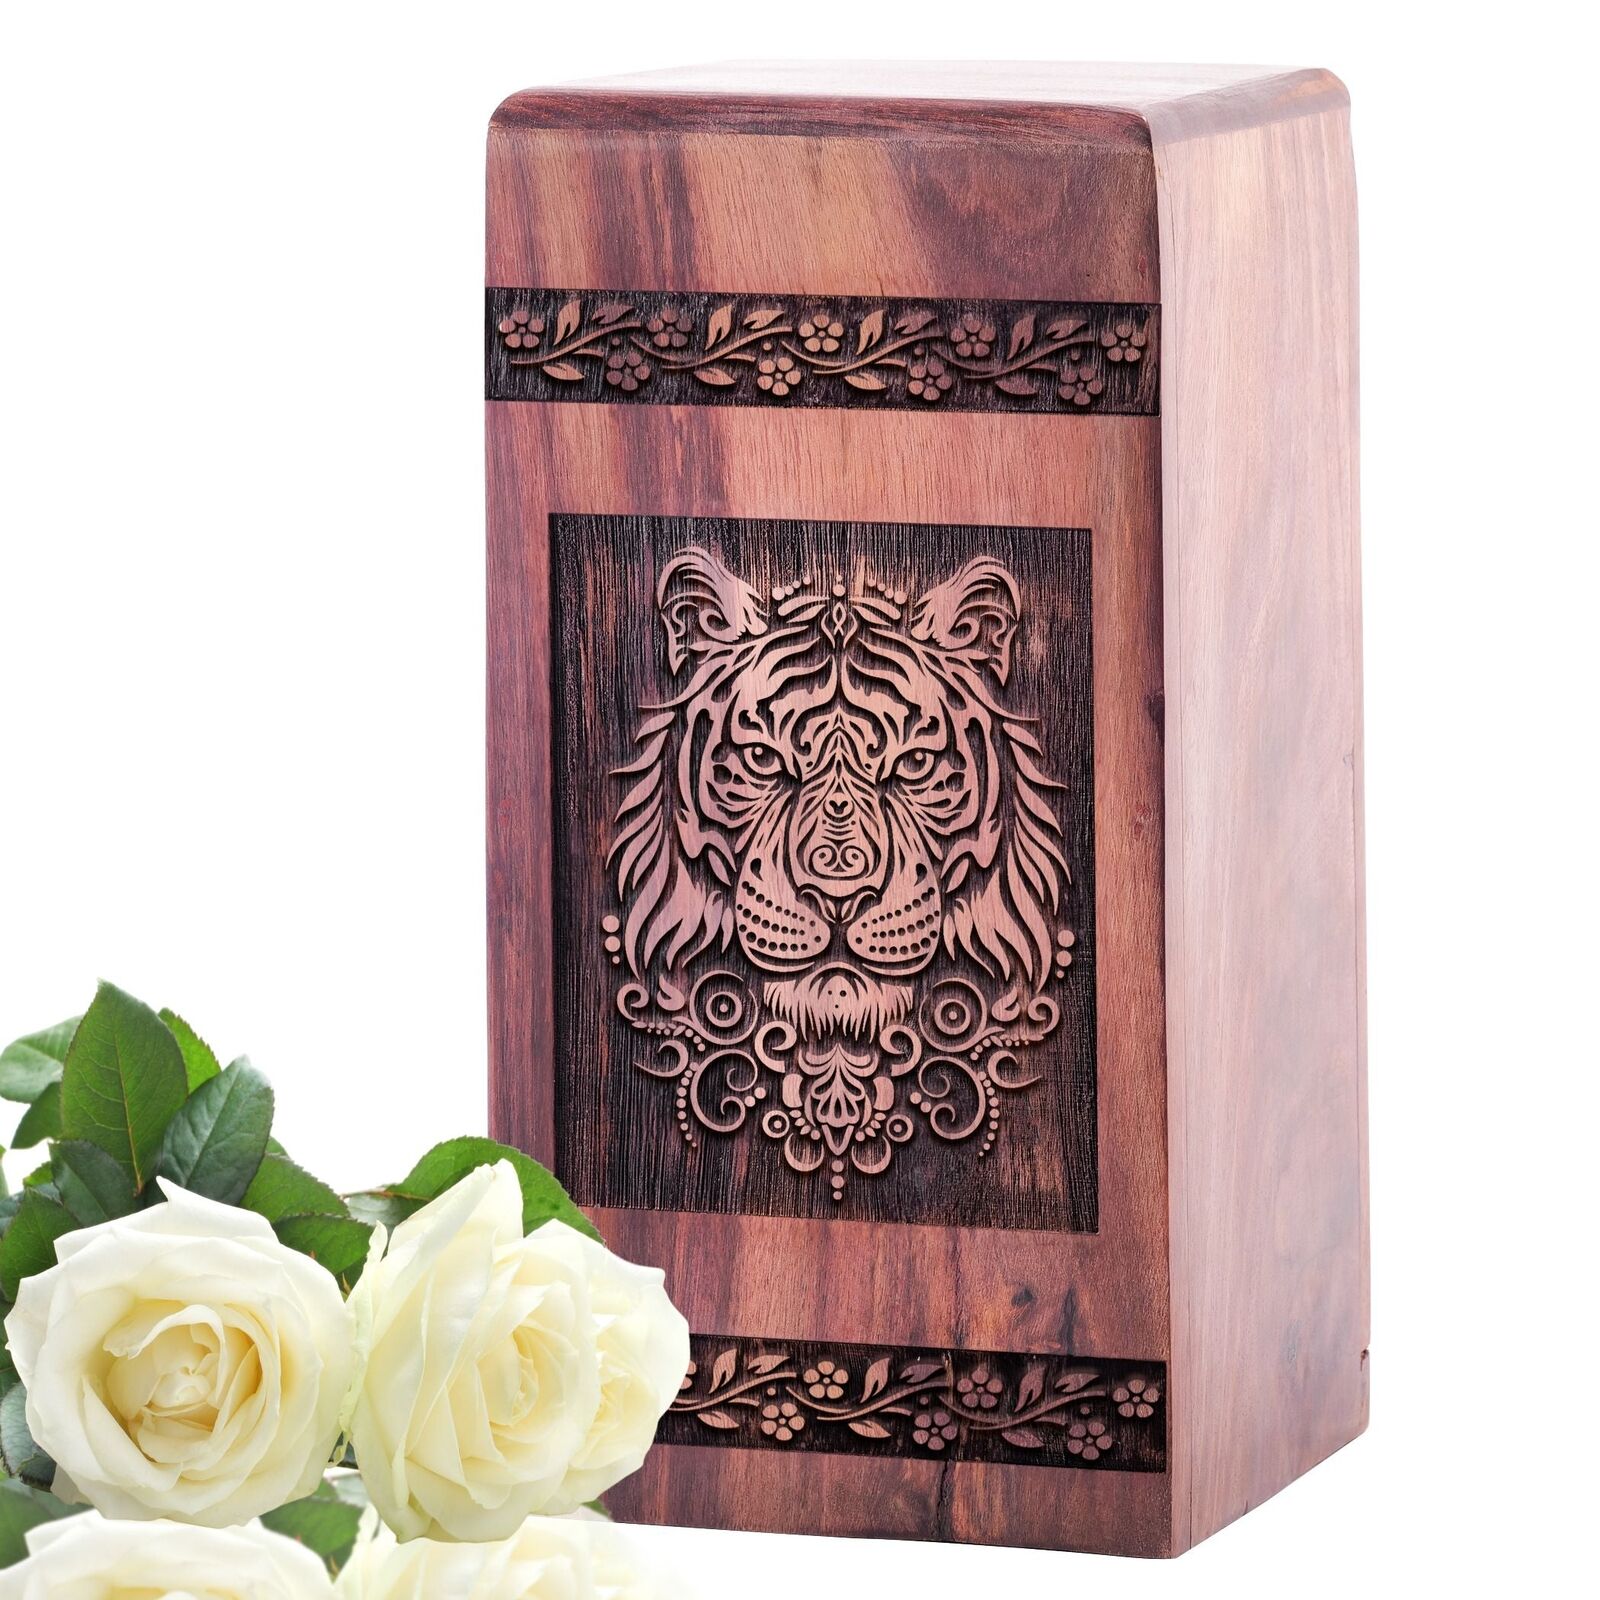 Tiger Cremation Wooden Urn - Unique Custom Funeral Urn for Adult Ashes